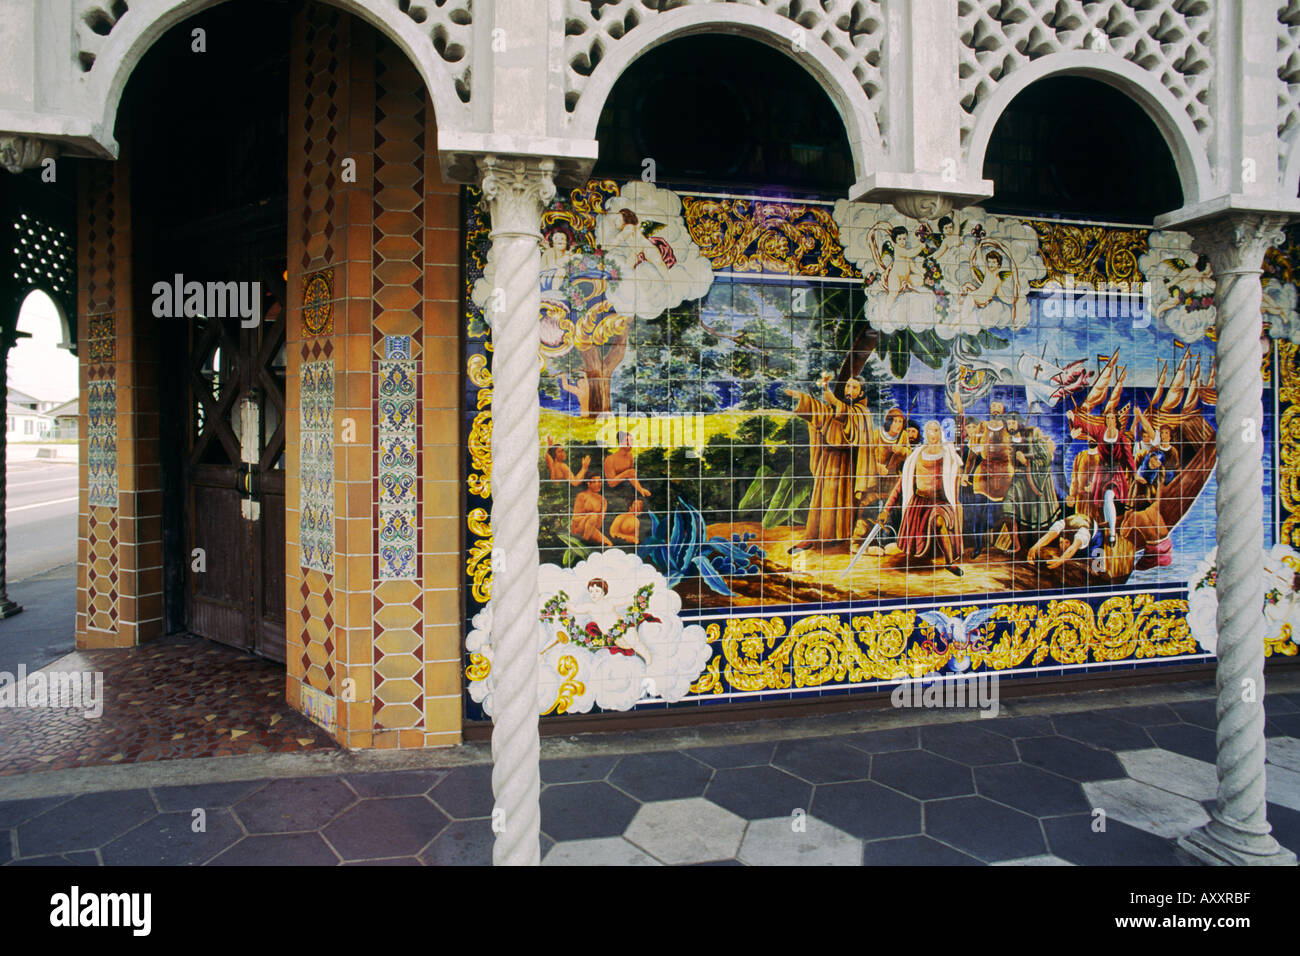 Berühmte original Fliesen Mosaik Wandbild Bilder schmücken die Columbia Restaurant im kubanischen Stadtteil Ybor City, Tampa, Florida, USA Stockfoto